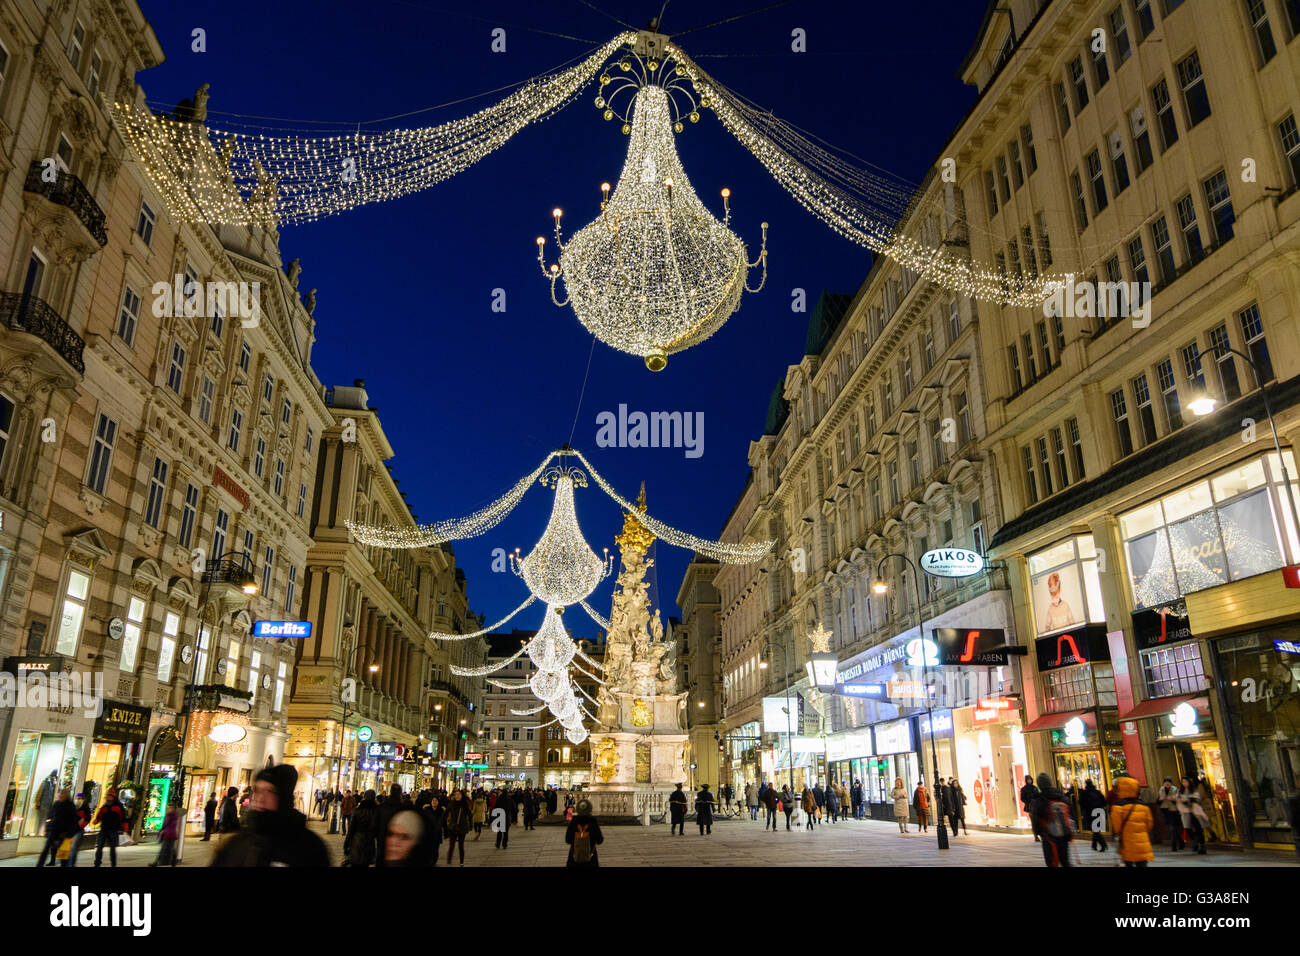 Downtown pedestrian Graben with lights for Christmas, Austria, Wien, 01., Wien, Vienna Stock Photo